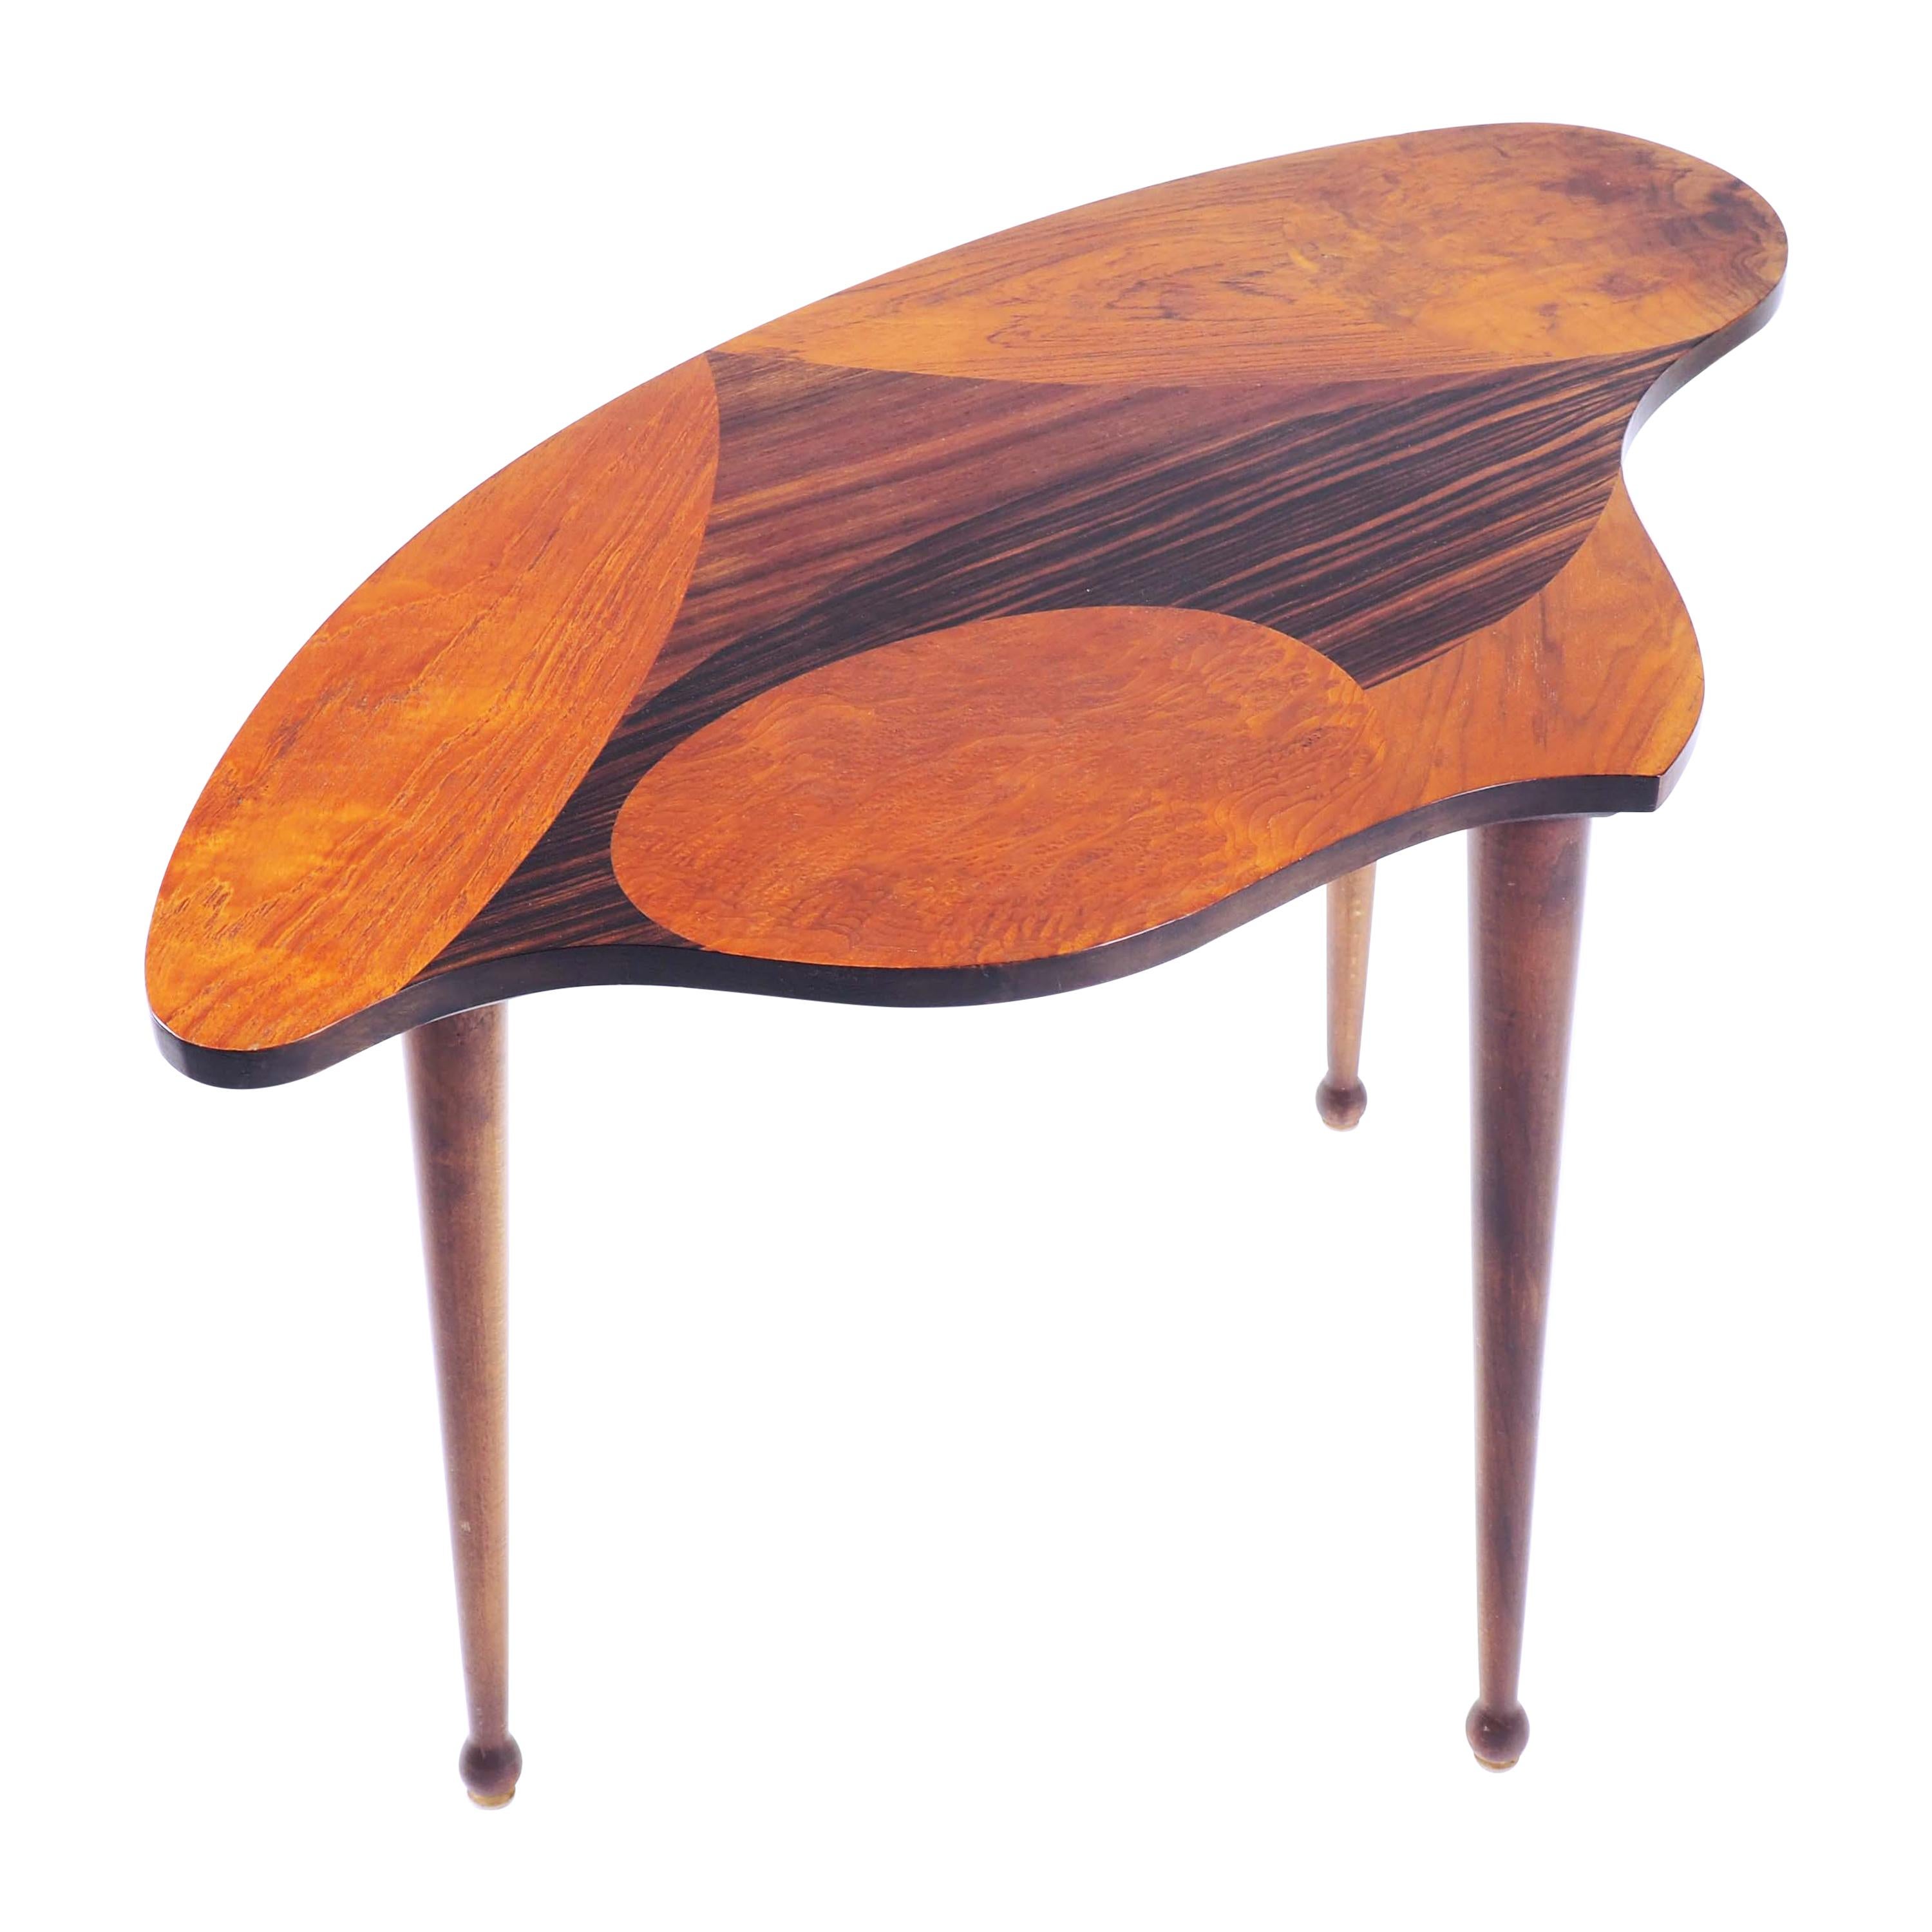 Organic Shaped Swedish Side Table with Inlaid Wood